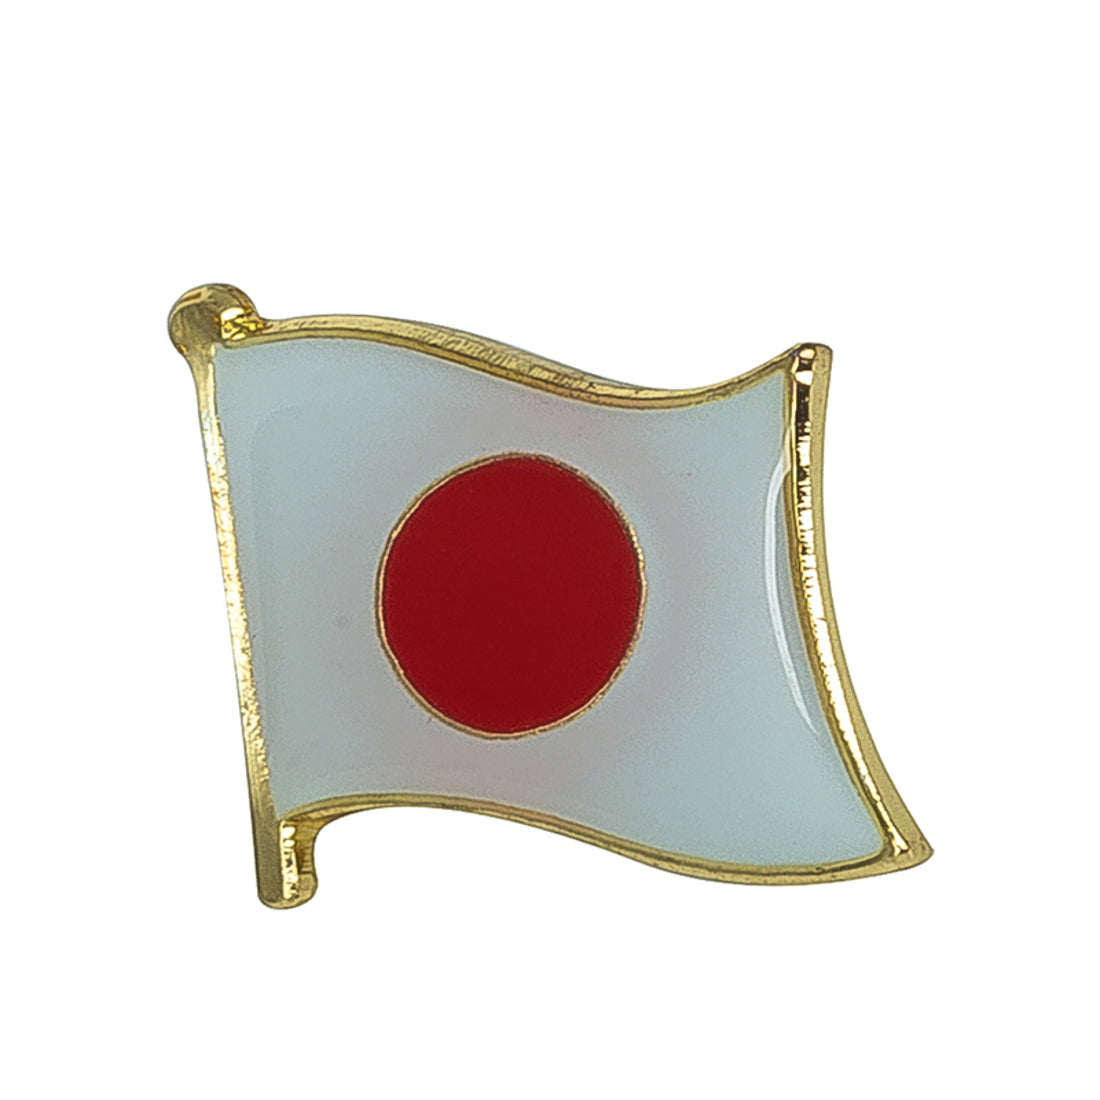 Japan Flag Lapel Pin - 3/4" x 5/8"